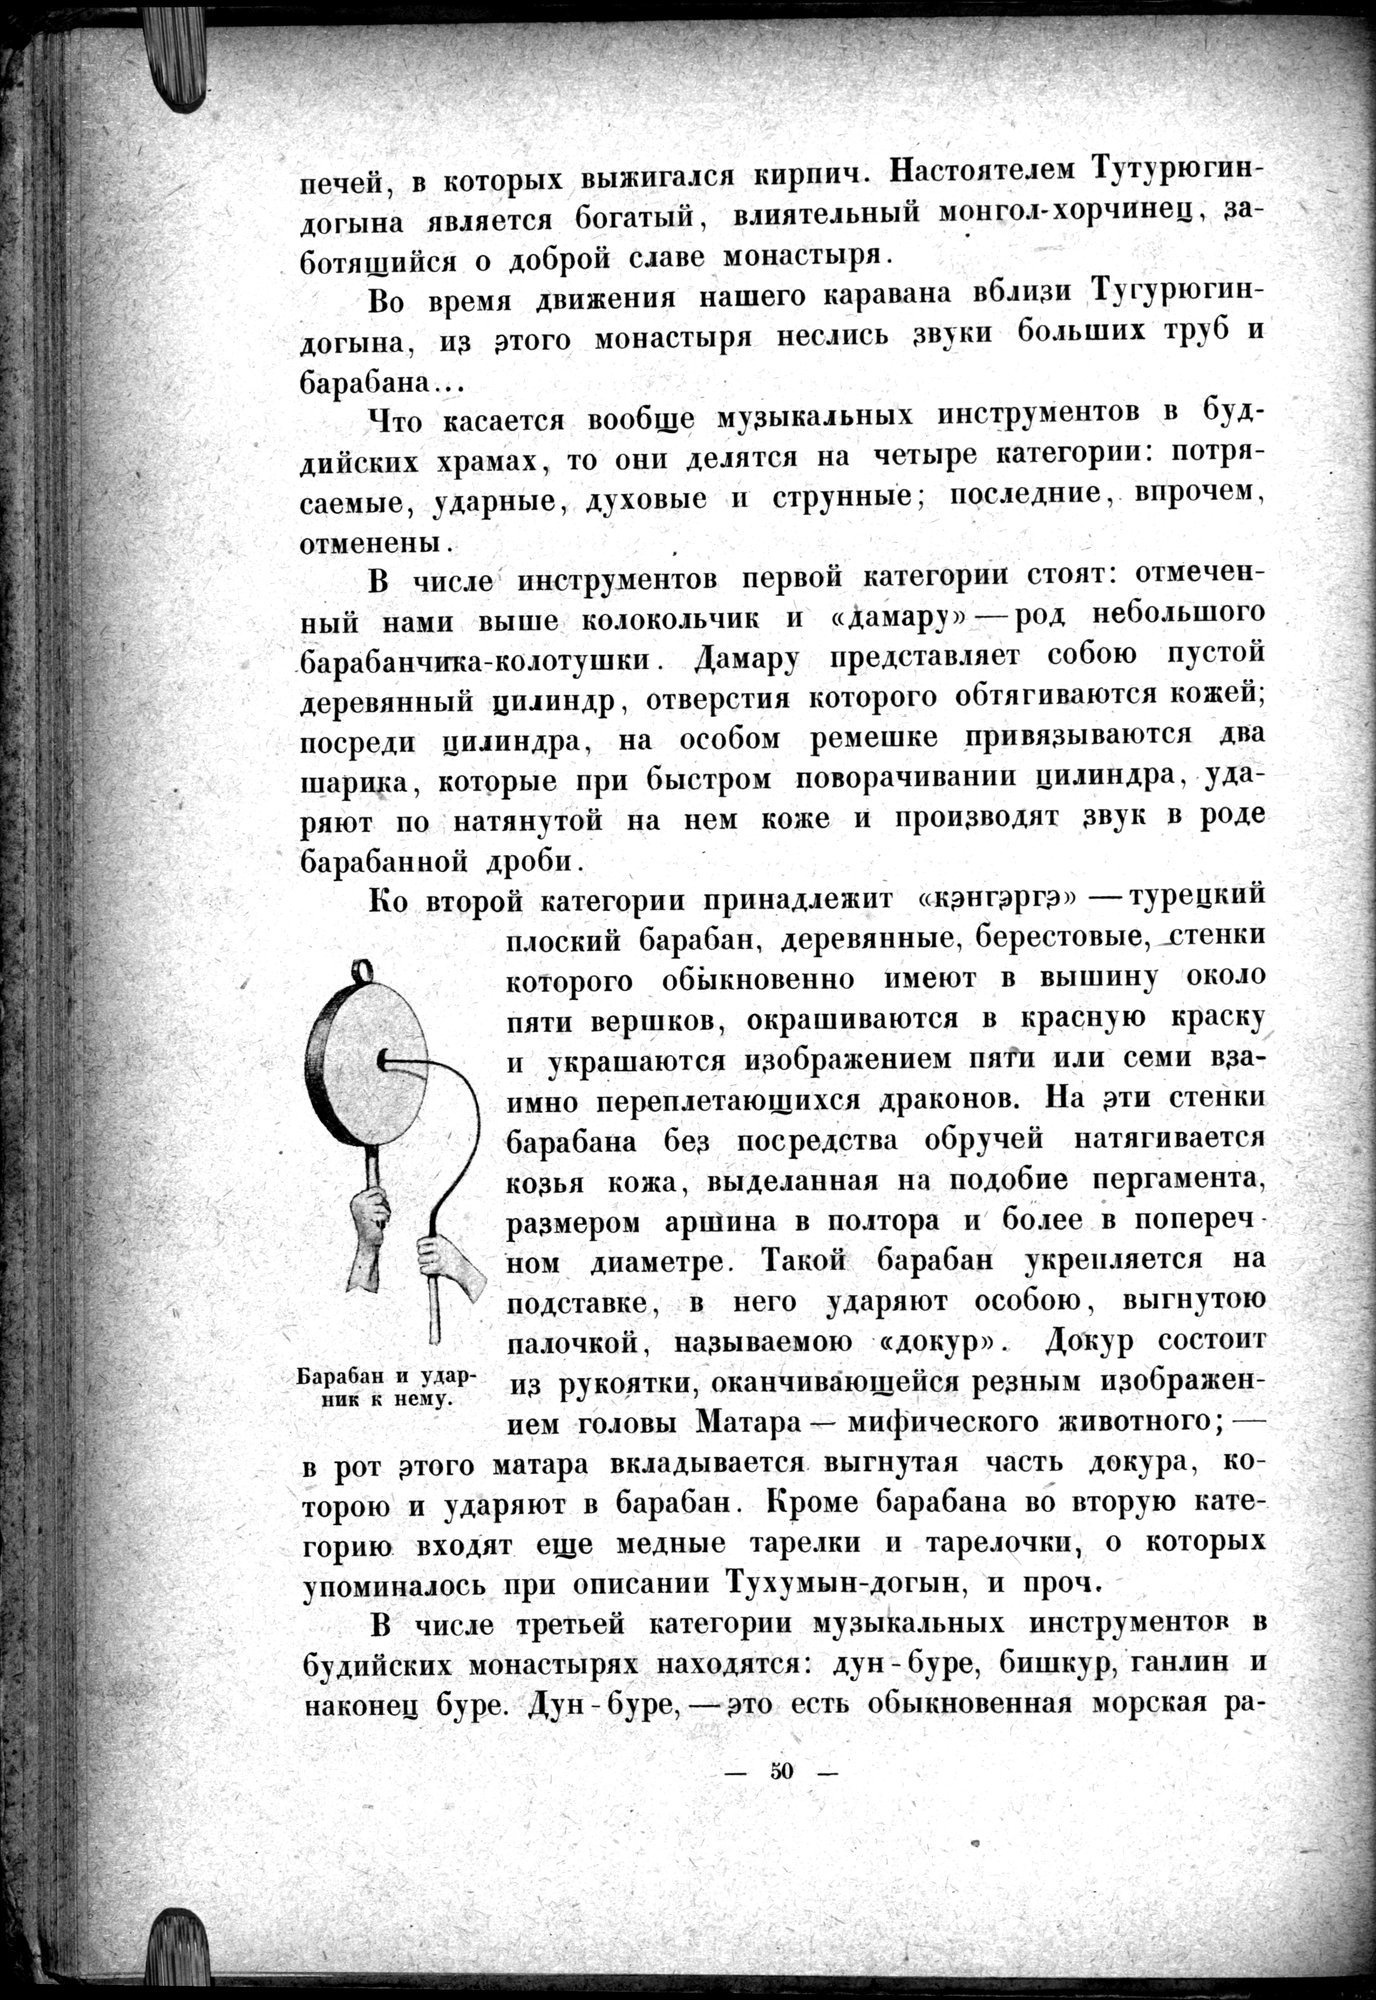 Mongoliya i Amdo i mertby gorod Khara-Khoto : vol.1 / Page 74 (Grayscale High Resolution Image)